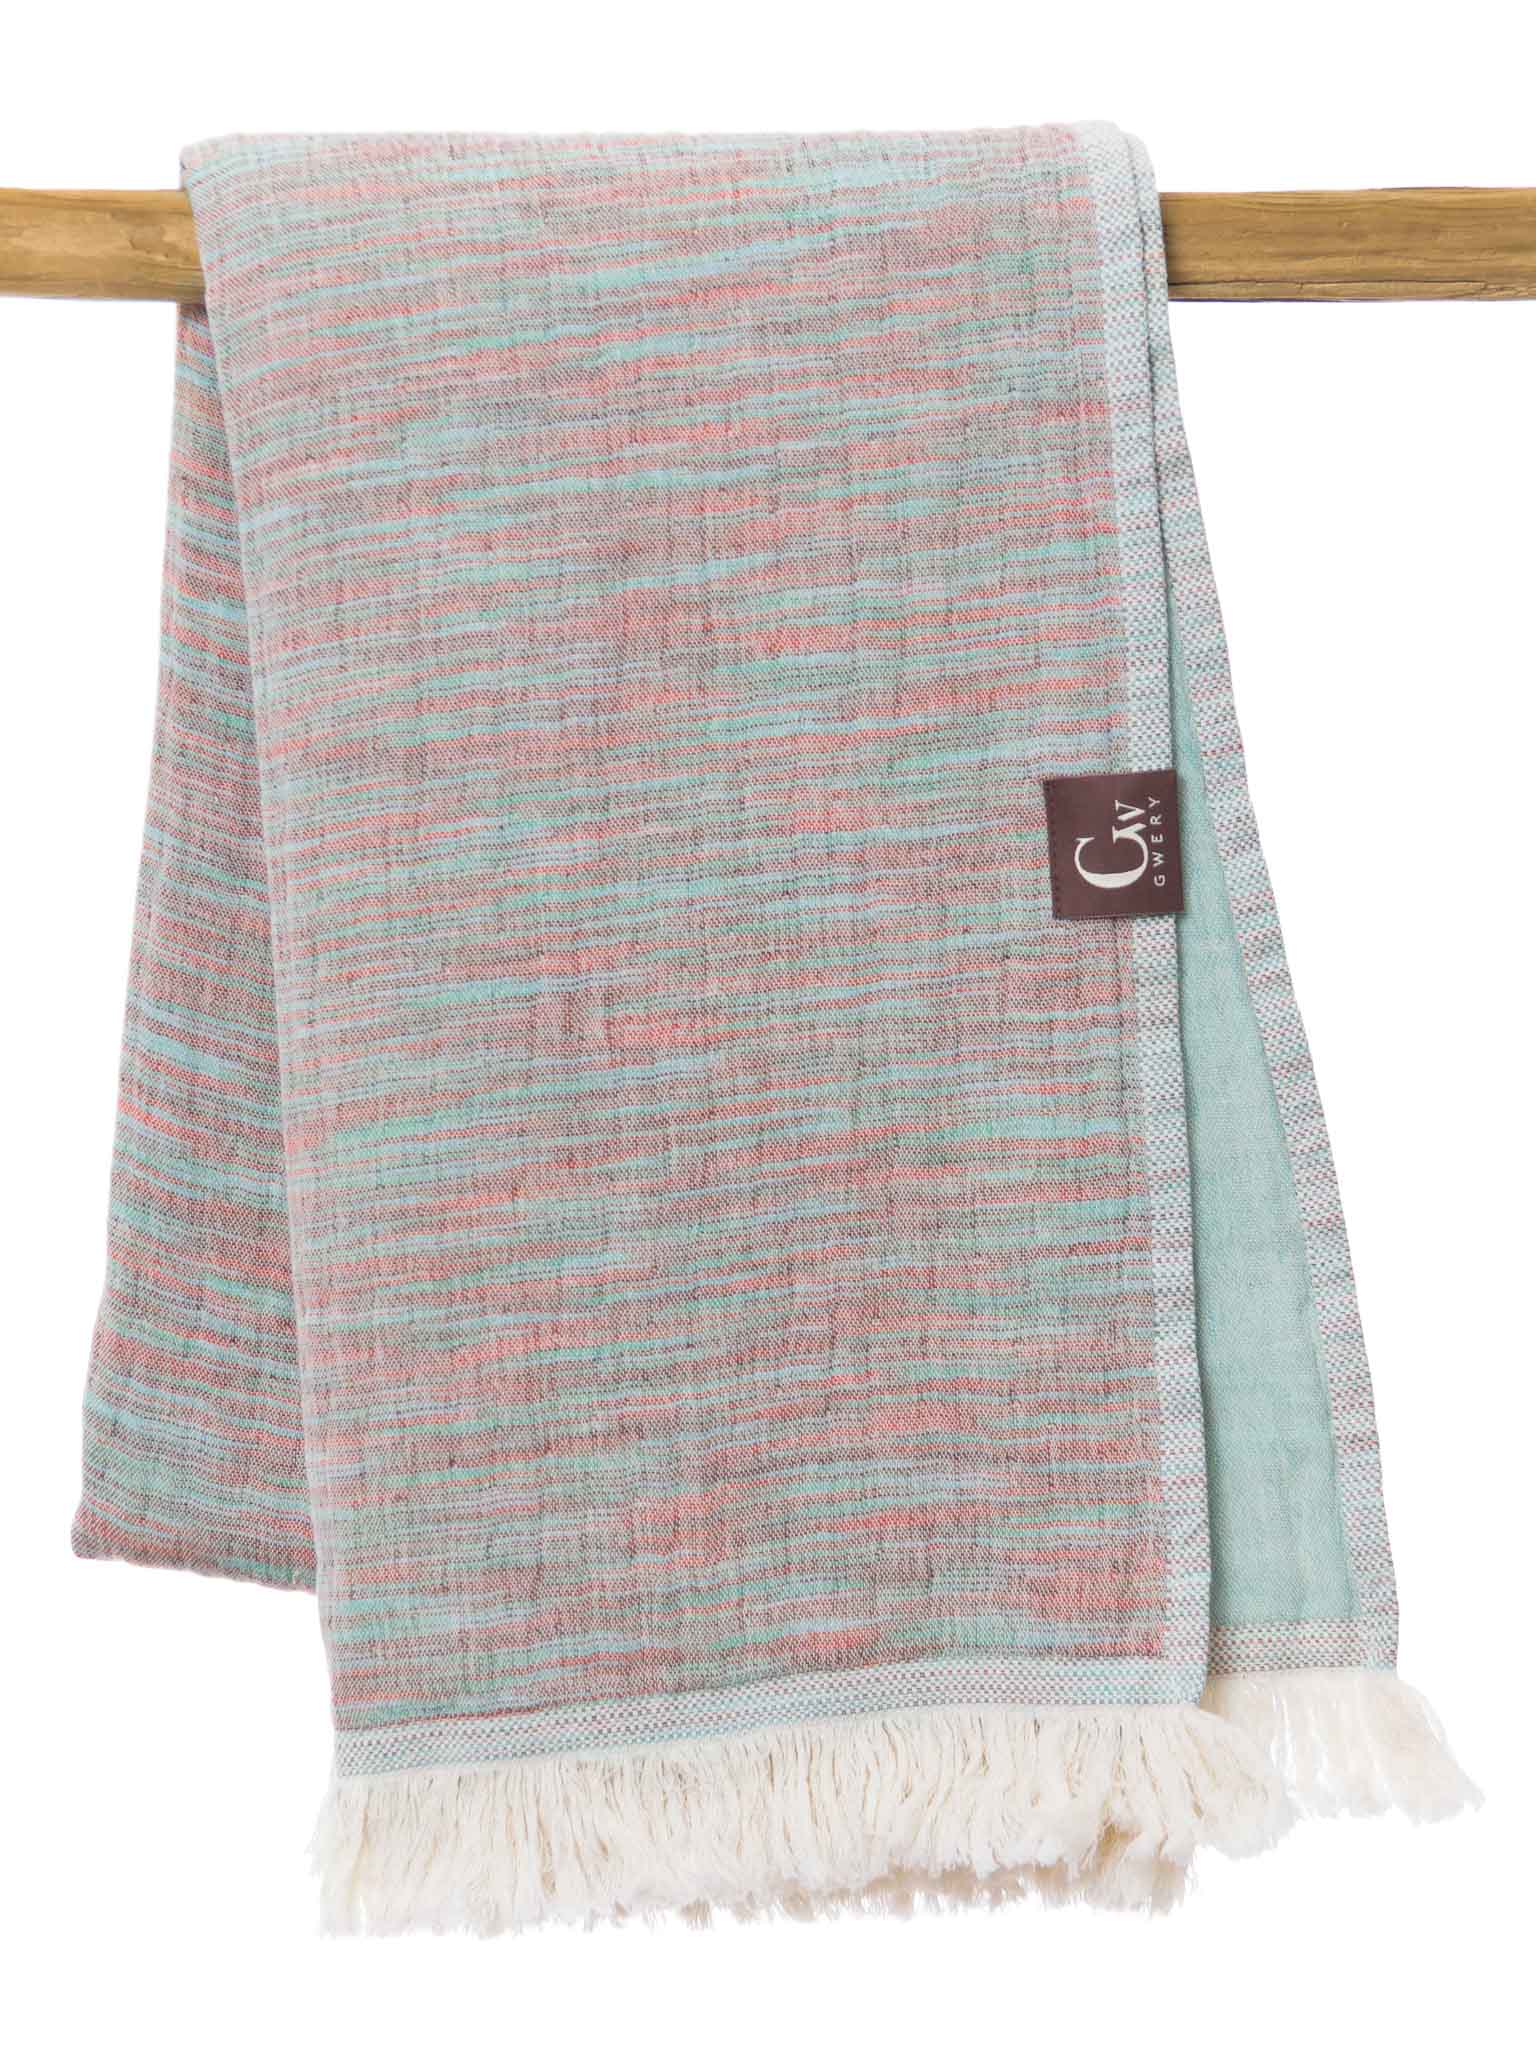 Multicolor double sided beach towel folded